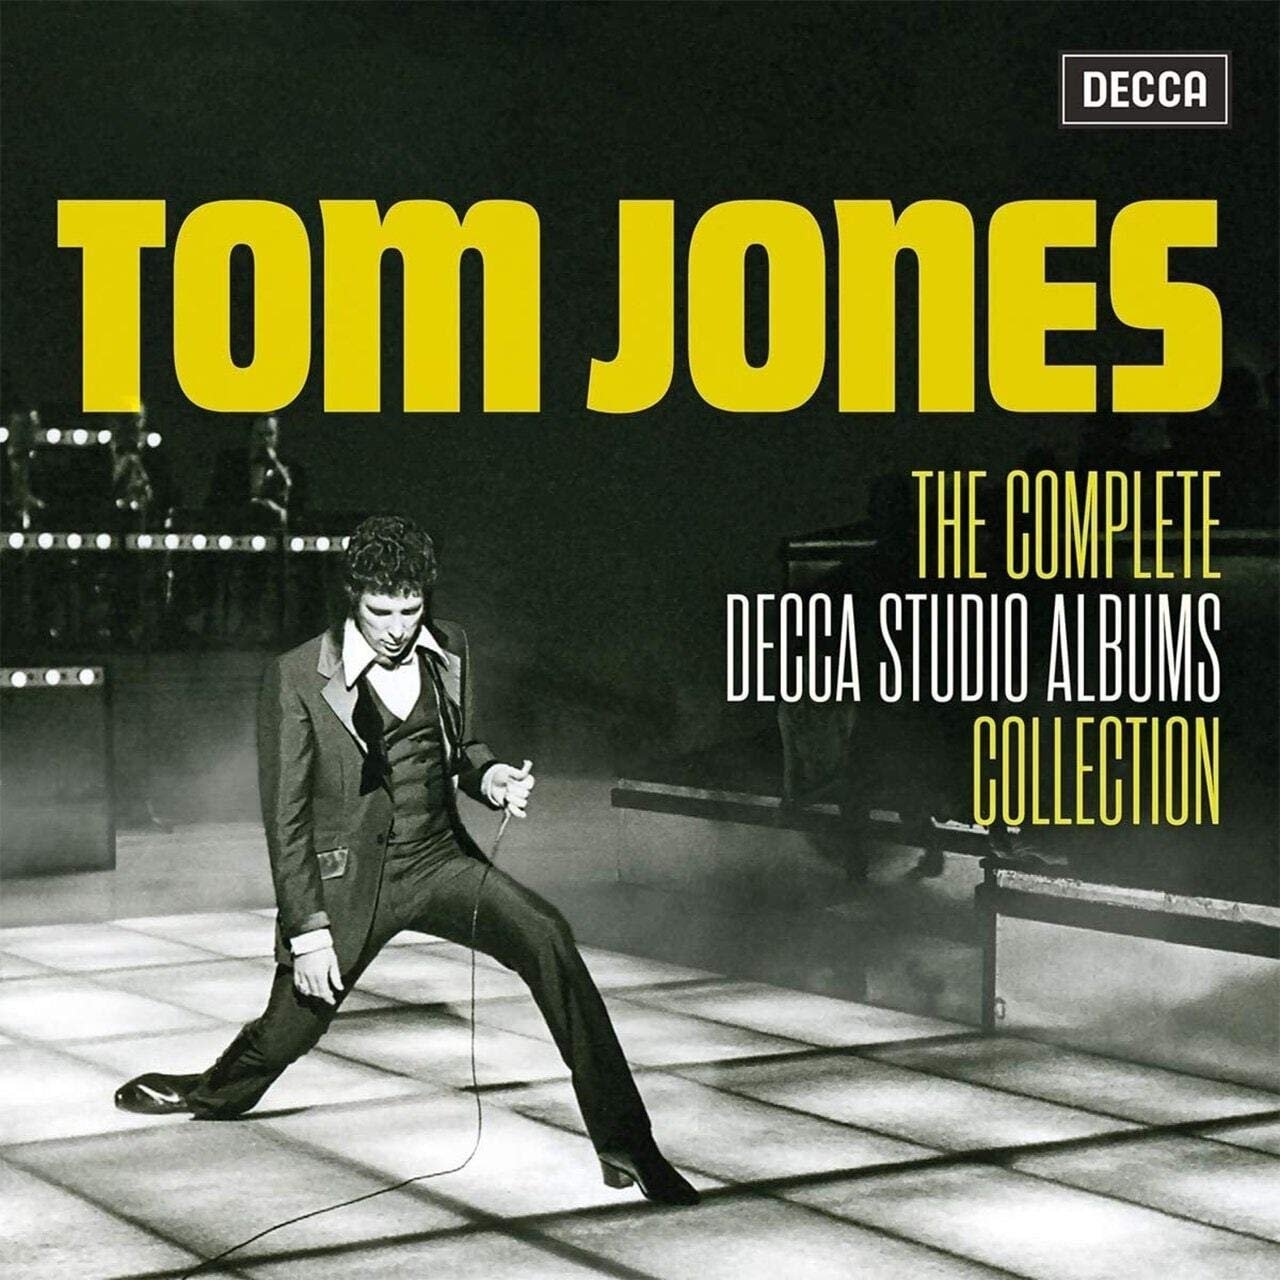 Tom Jones - The Complete Decca Studio Albums Collection (2020) FLAC Download